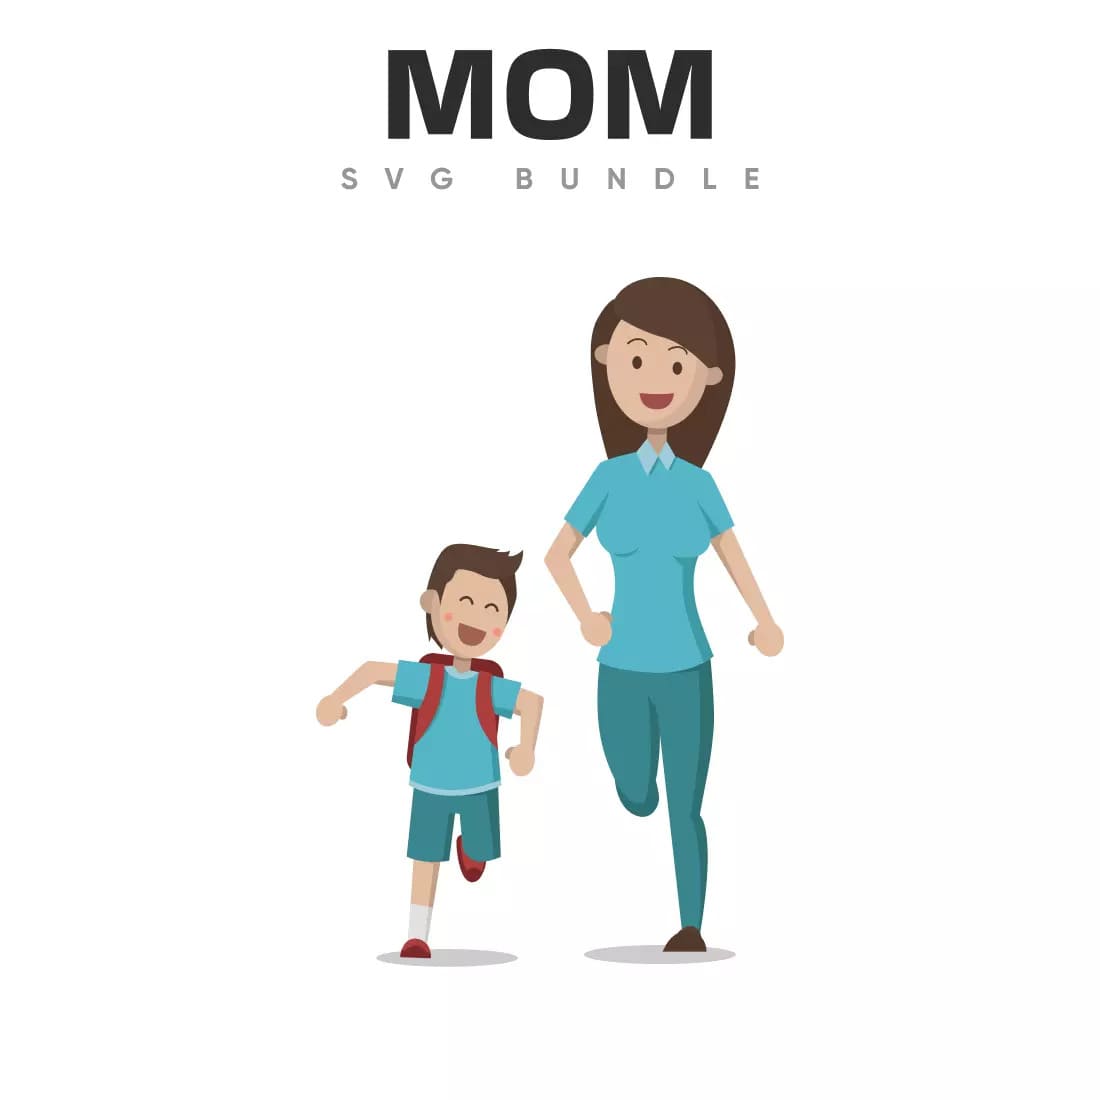 Mom SVG Bundle Preview 9.